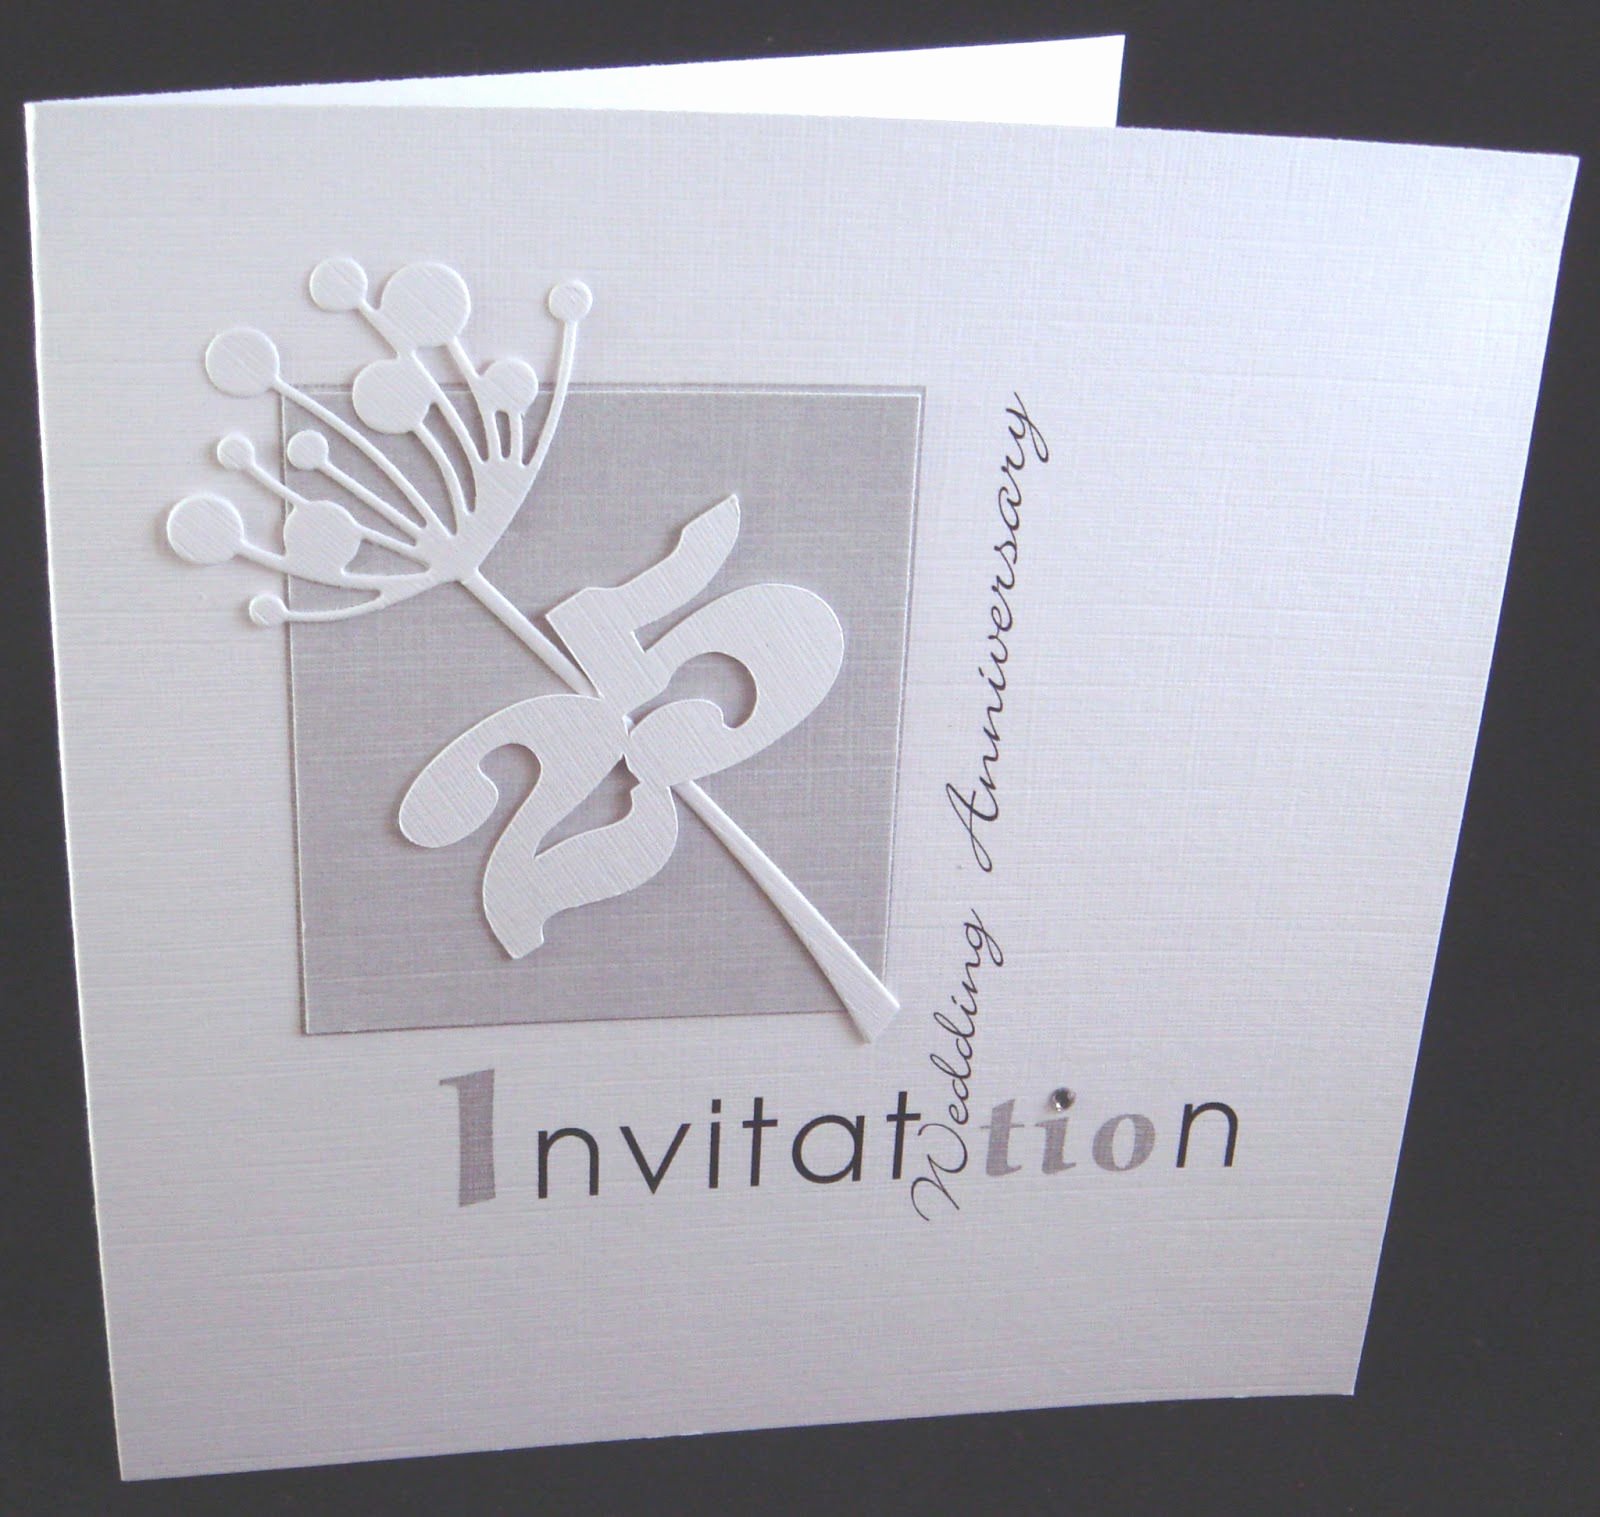 25th Wedding Anniversary Invitation Cards Beautiful Anniversary Invitations 25th Silver Wedding Anniversary Invitations Invite Card Ideas